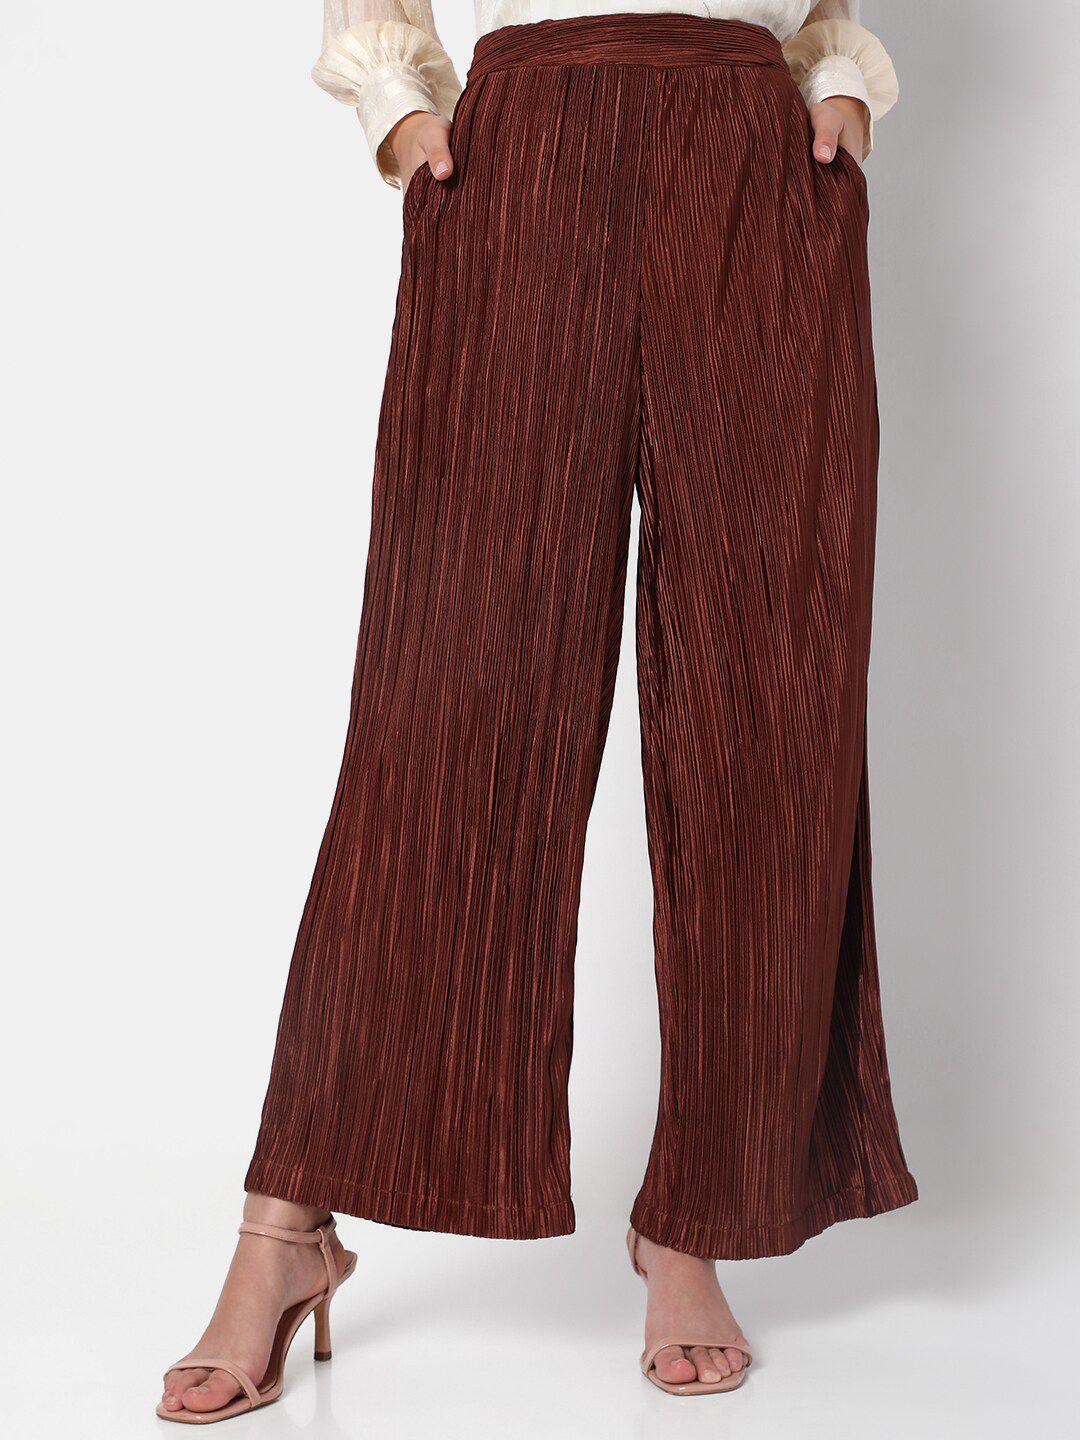 vero moda women brown flared high-rise trousers